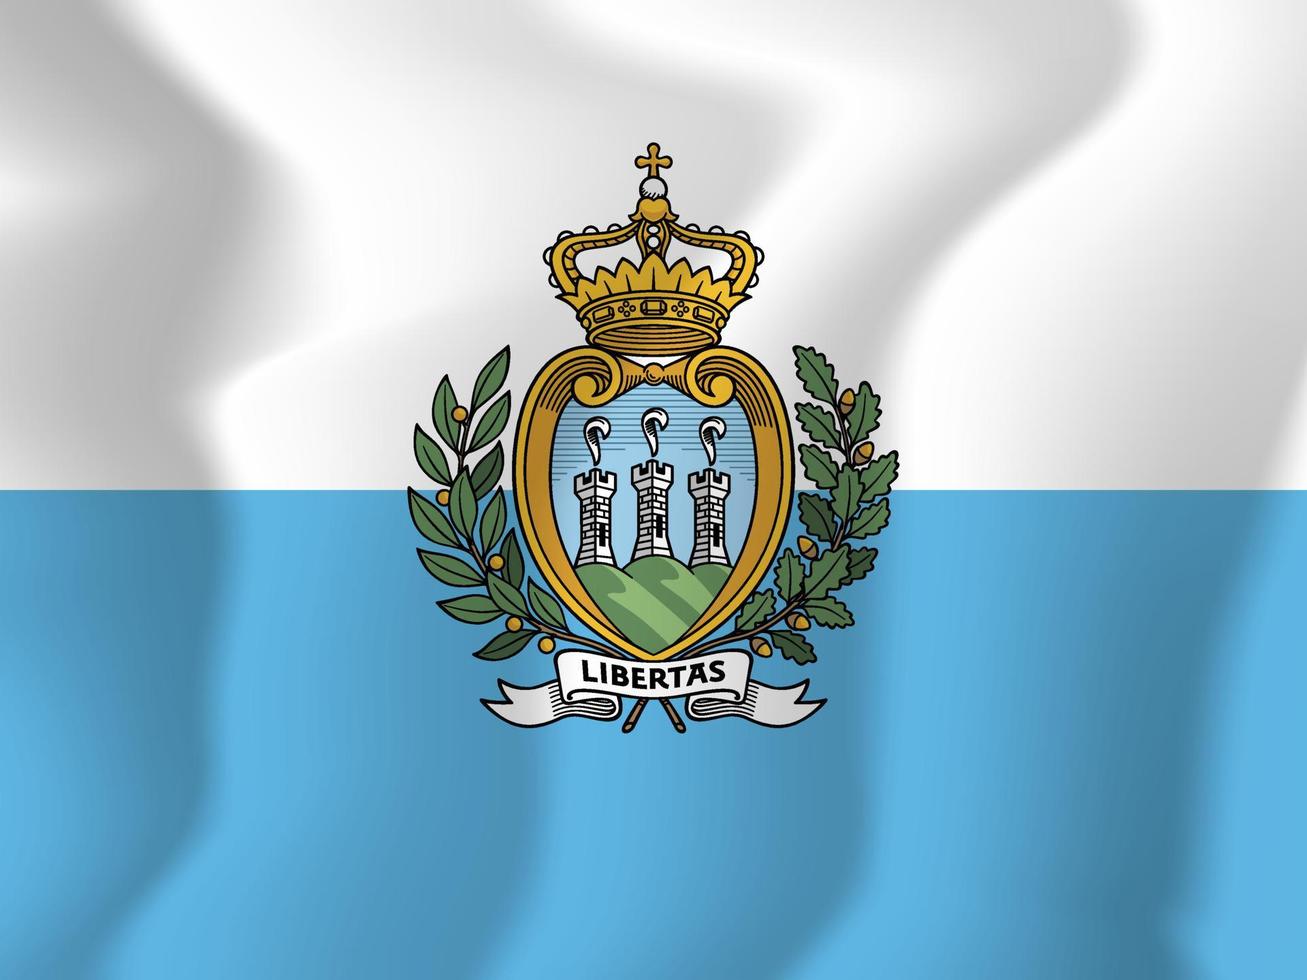 San Marino National Waving Flag Background Illustration vector